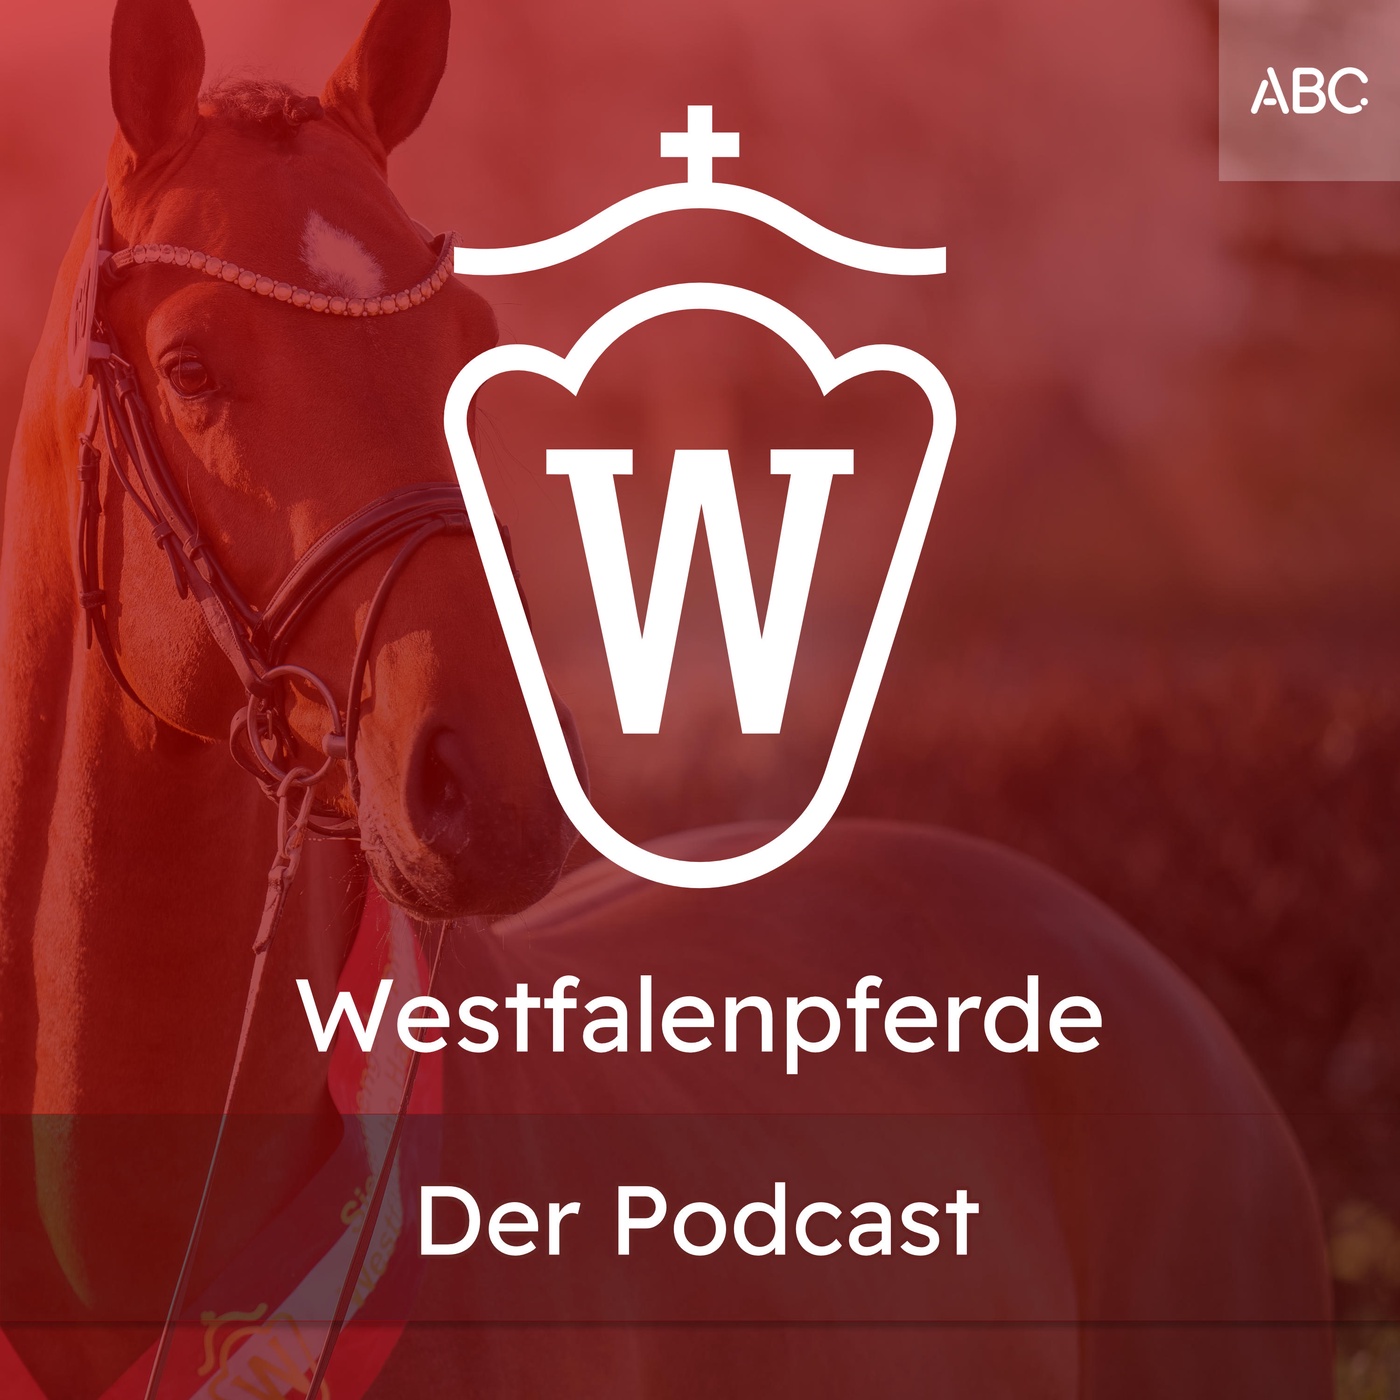 Westfalenpferde - Der Podcast